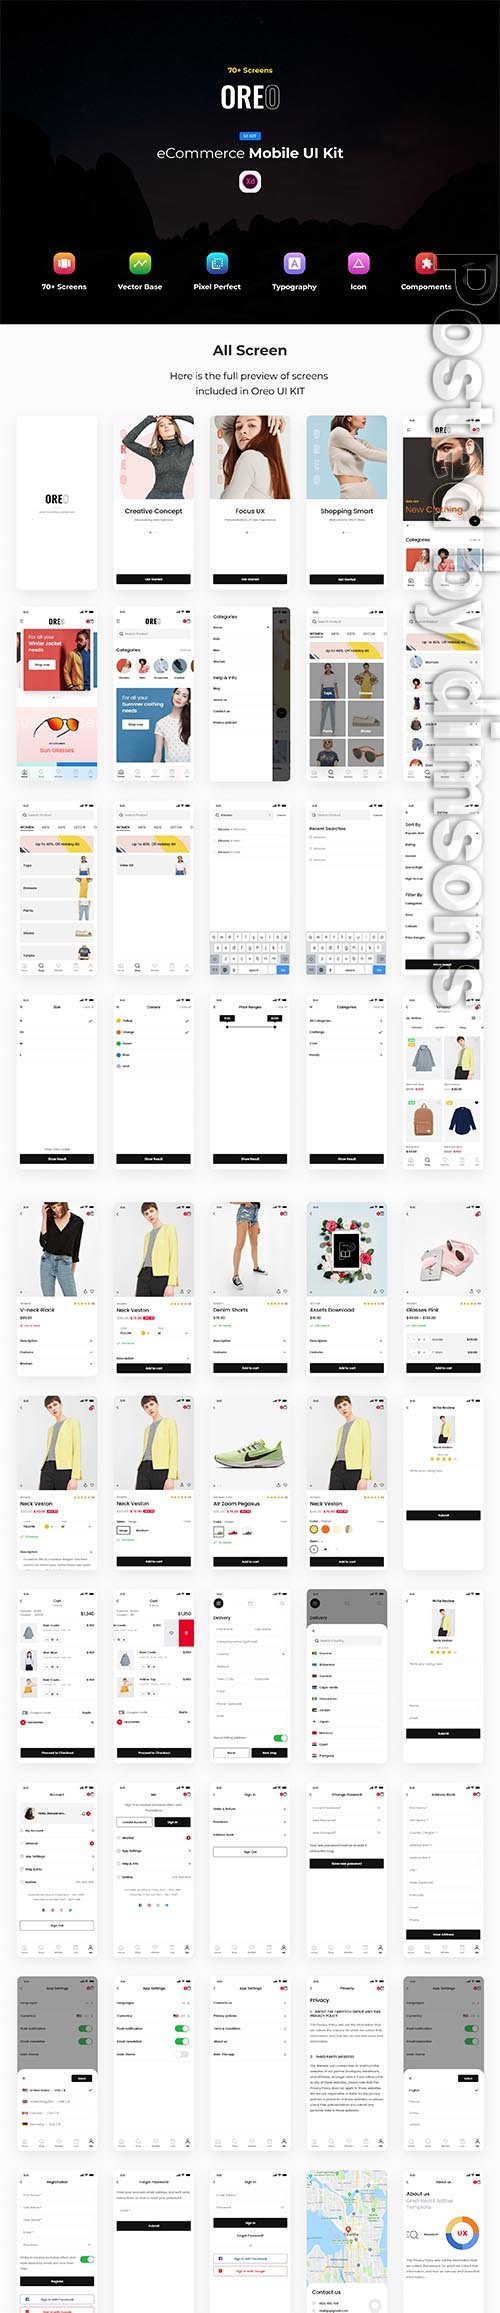 Oreo eCommerce Mobile UI Kit - UI8